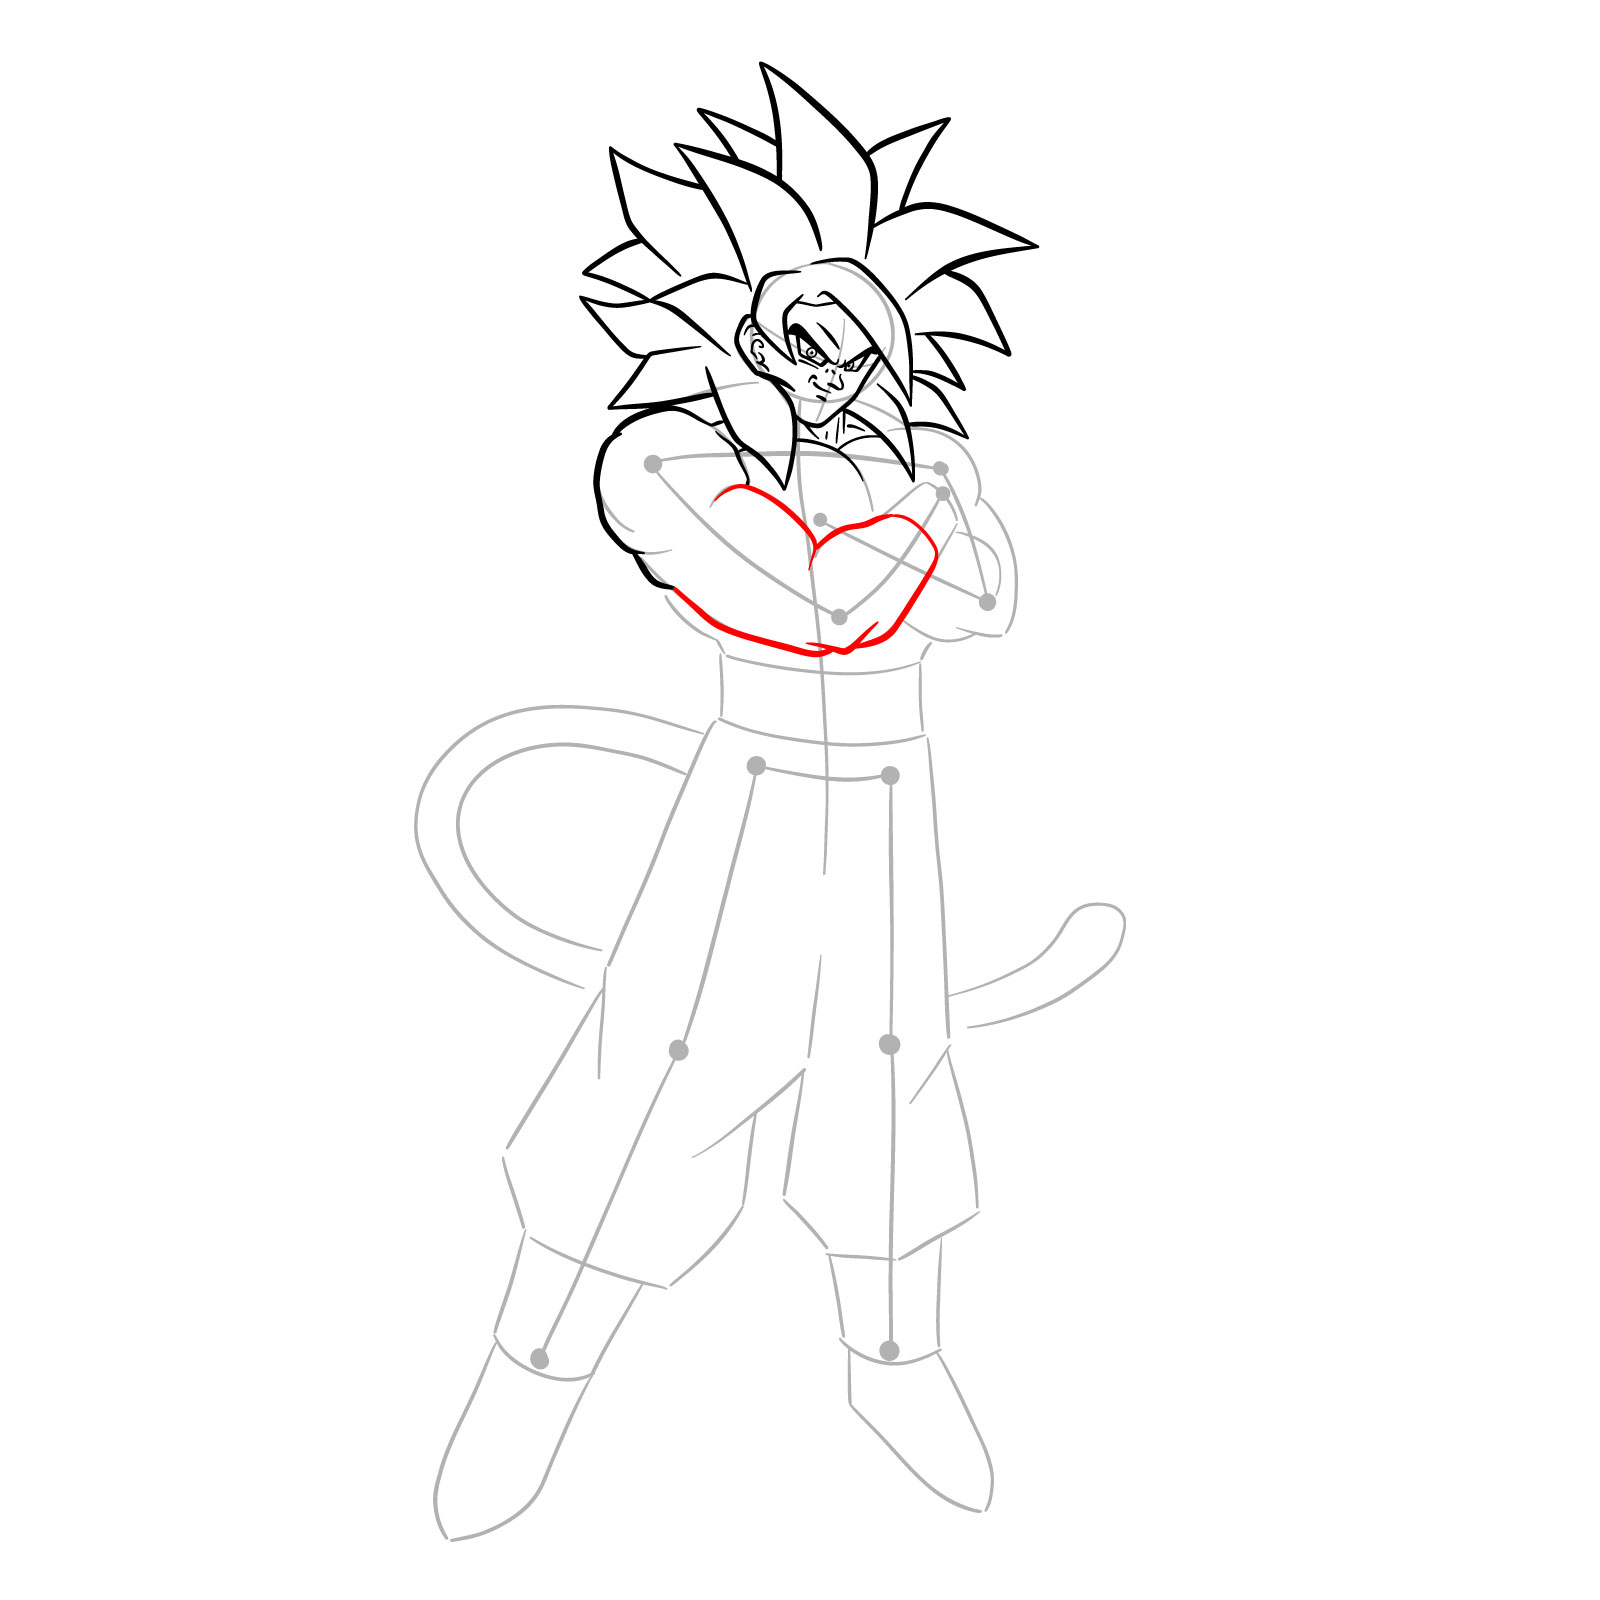 How to tát draw Goku Super Saiyan 4 - step 16